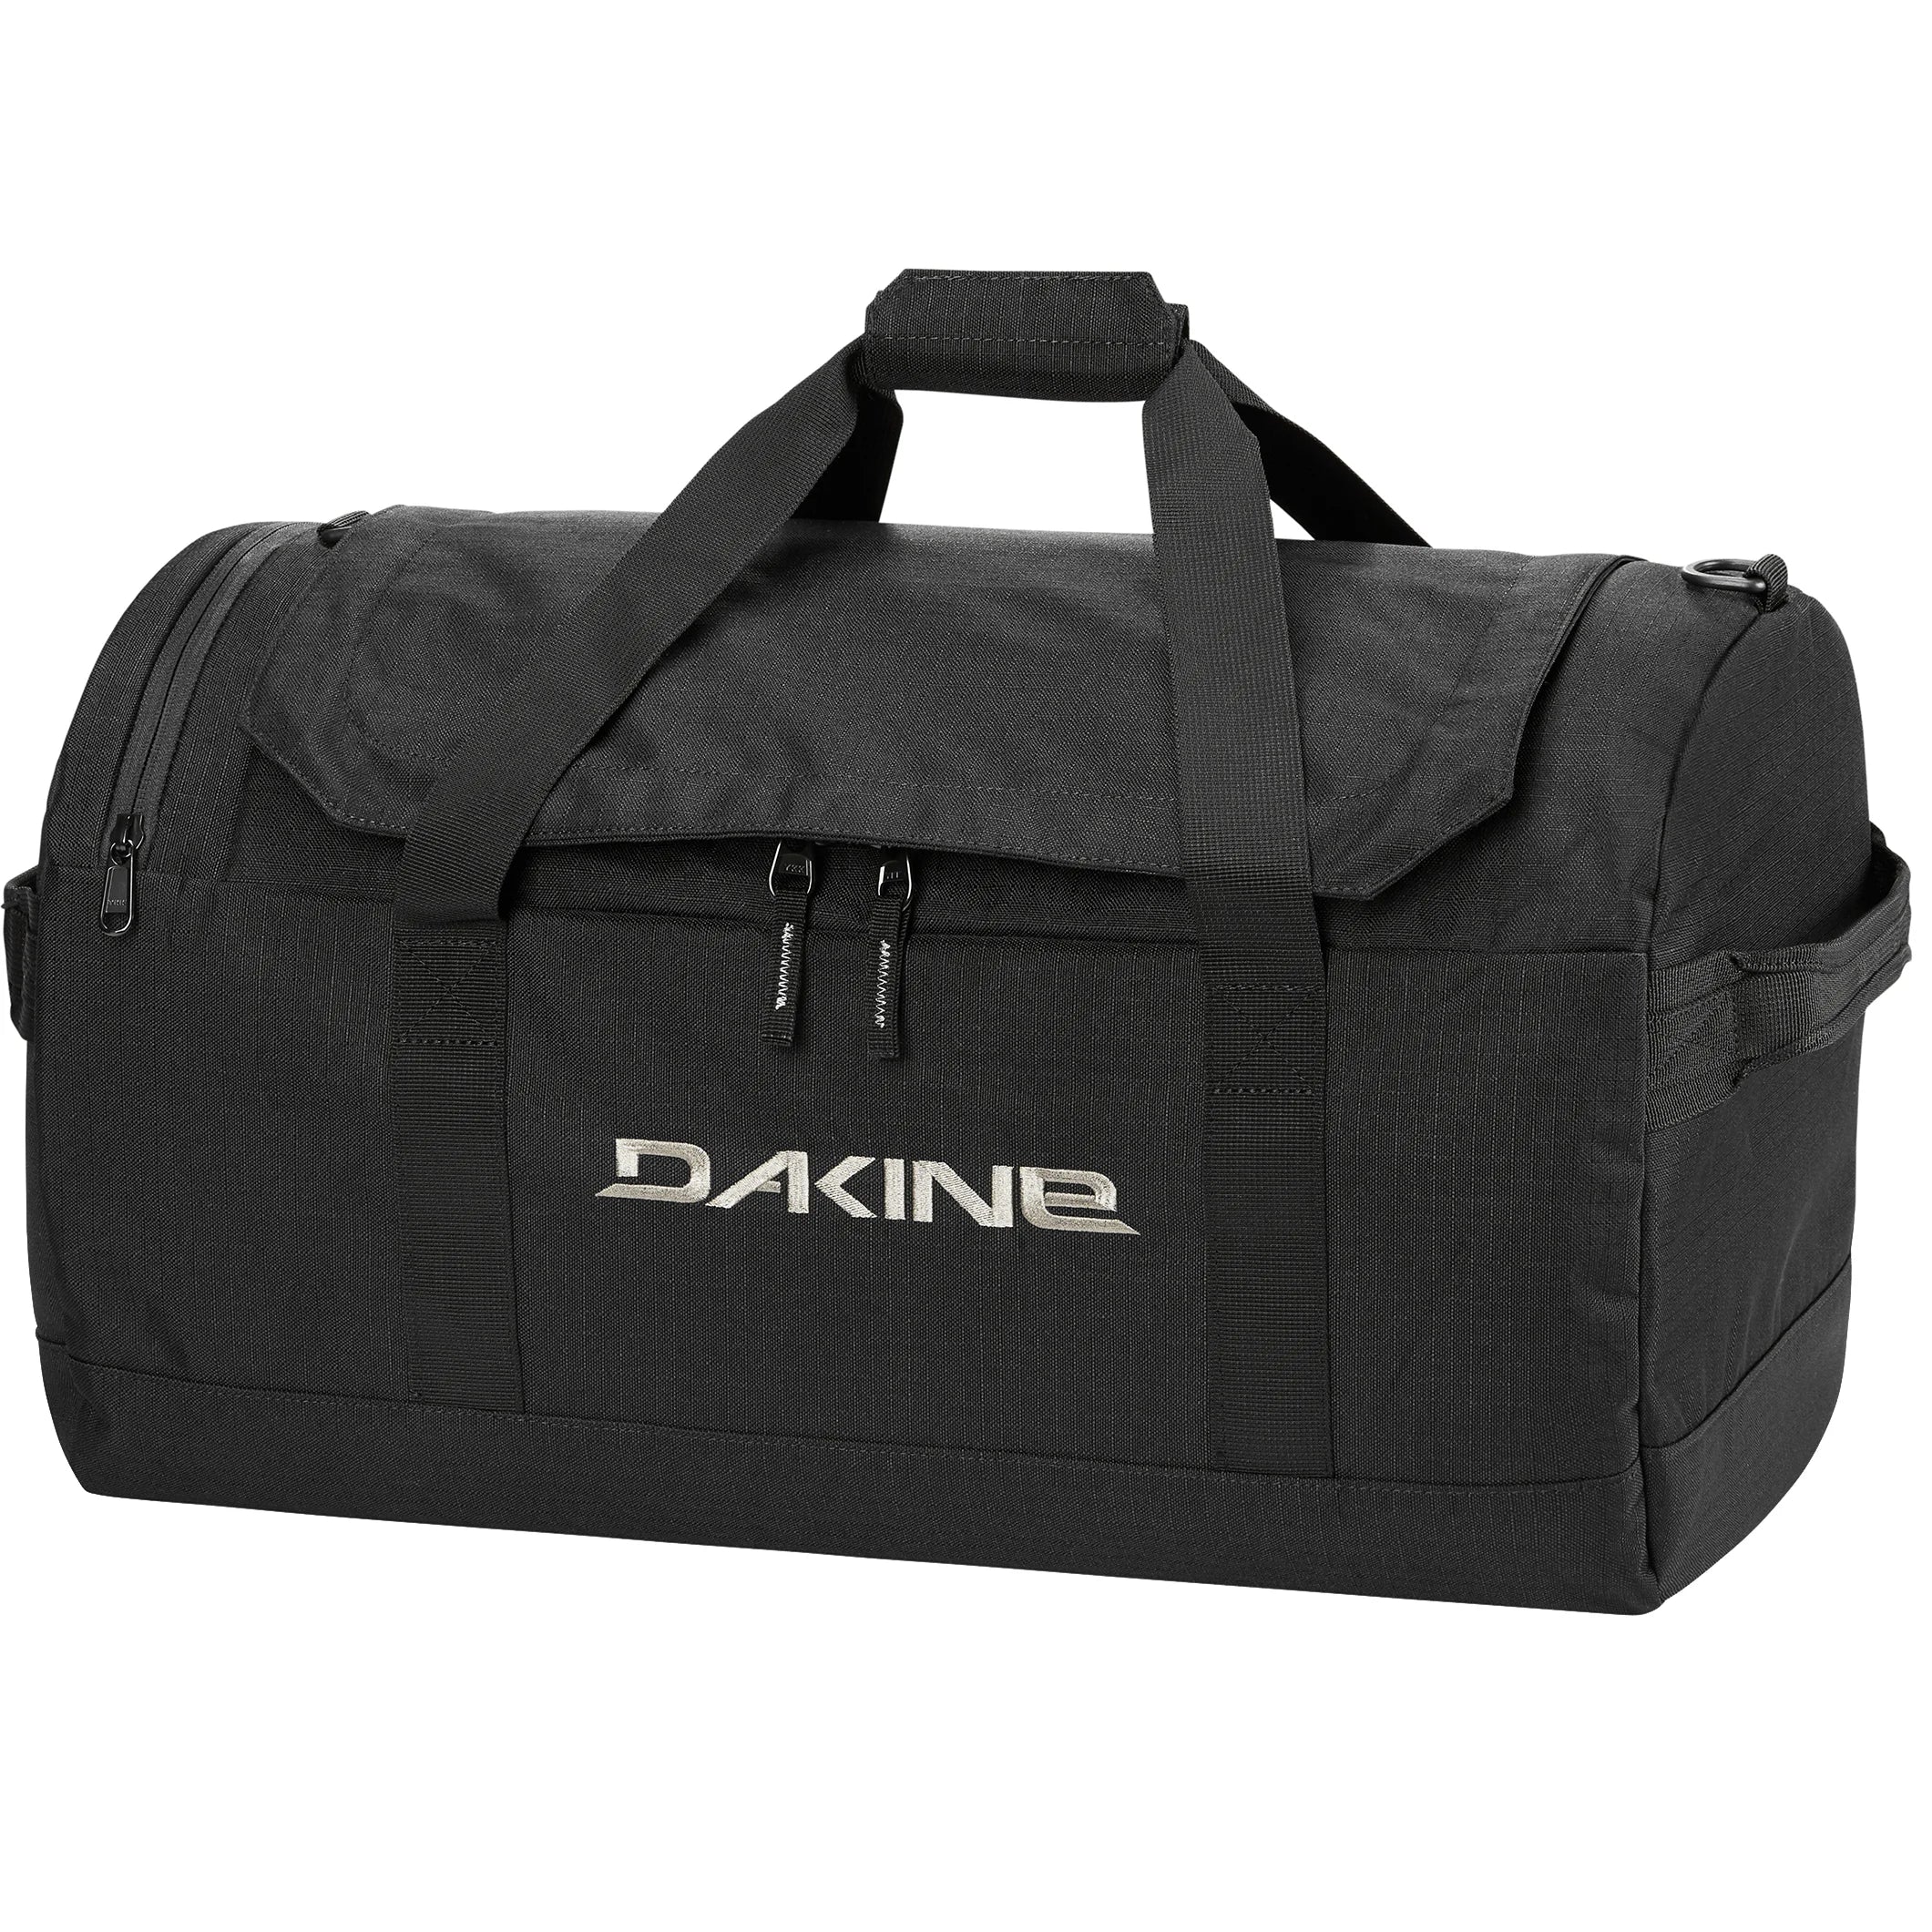 Dakine Packs &amp; Bags EQ Duffle 50L sac de sport 56 cm - Noir